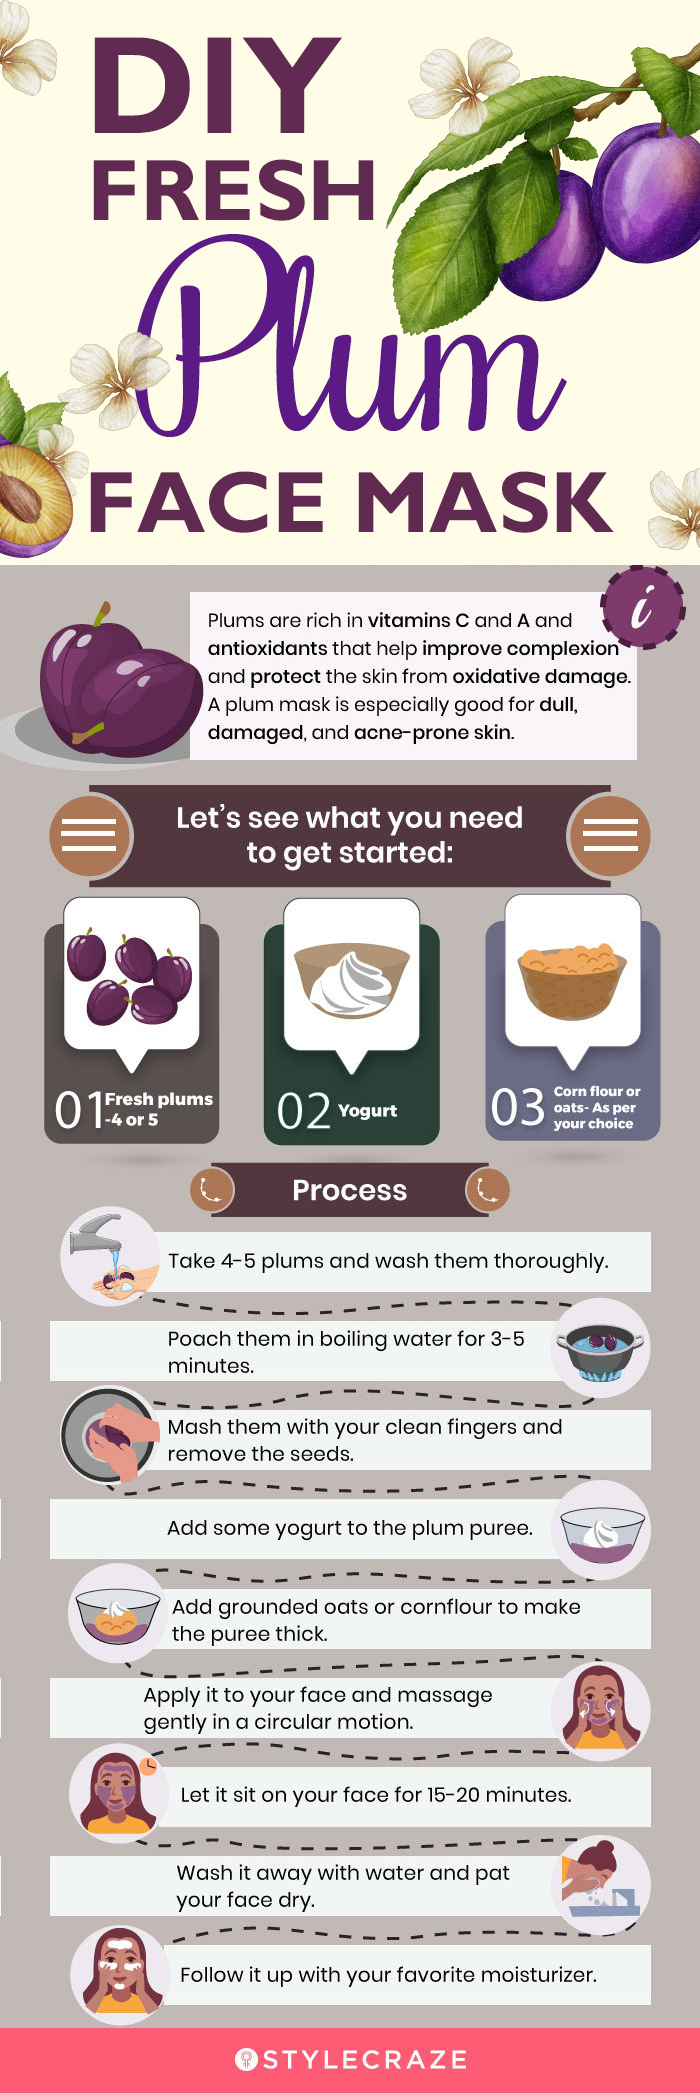 DIY fresh plum face mask [infographic]